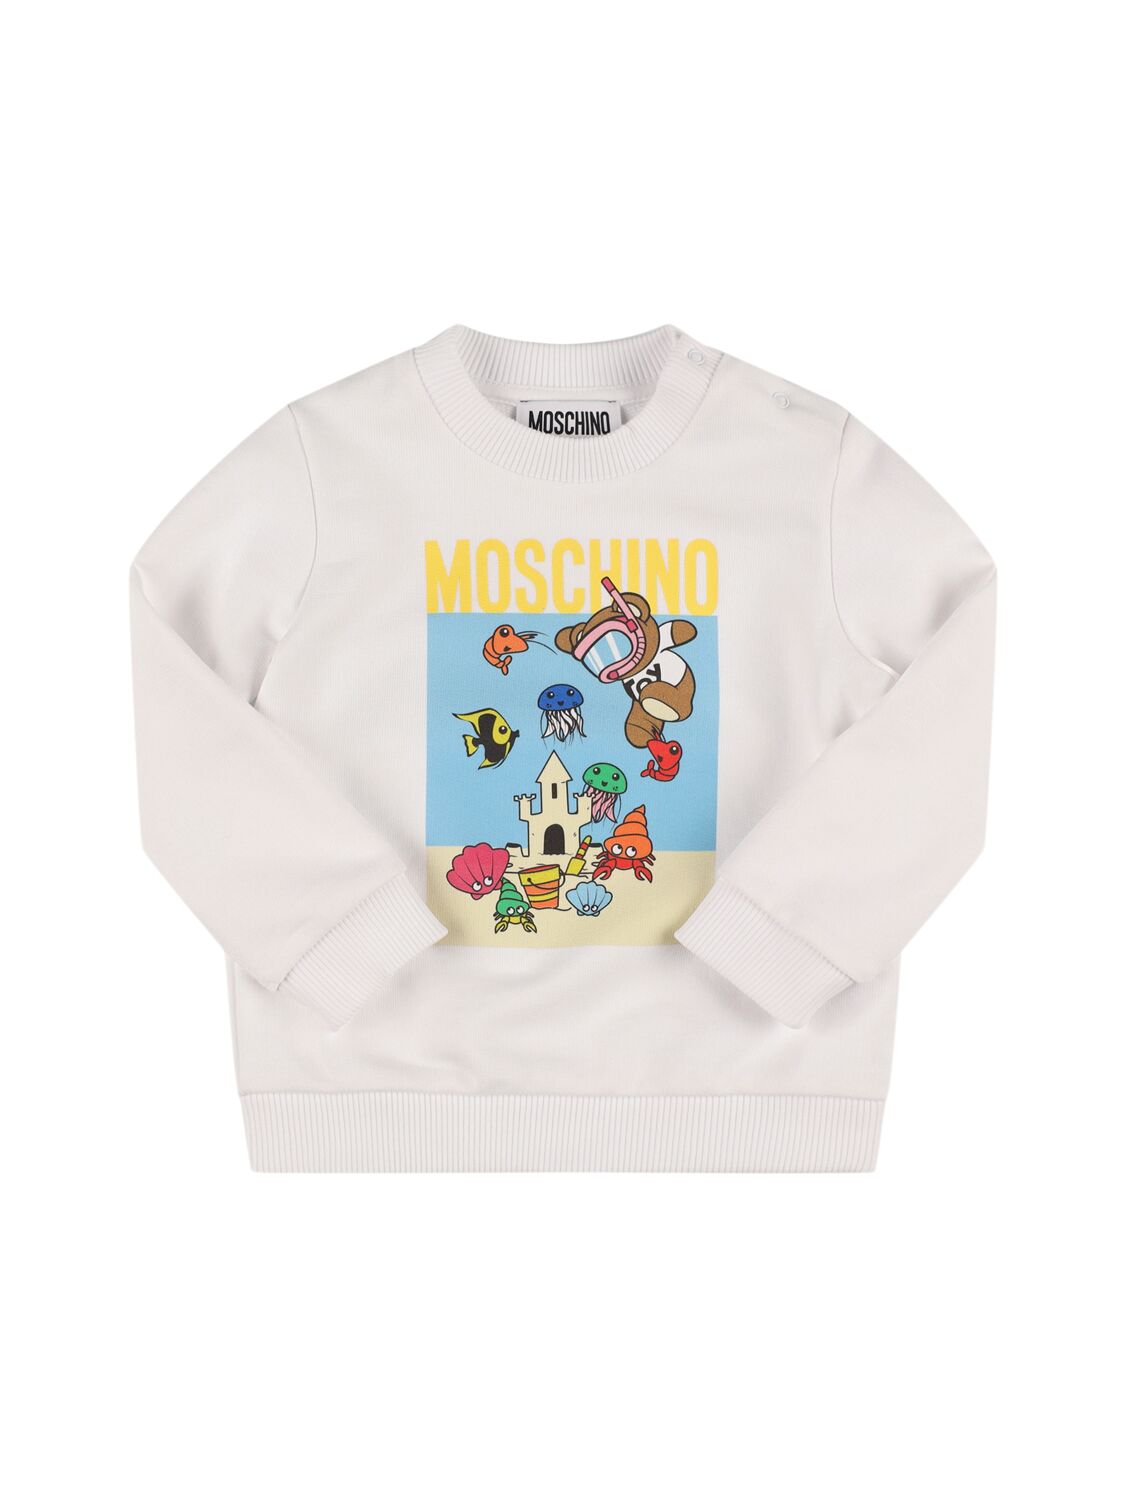 Moschino Kids' Printed Cotton Crewneck Sweatshirt In White